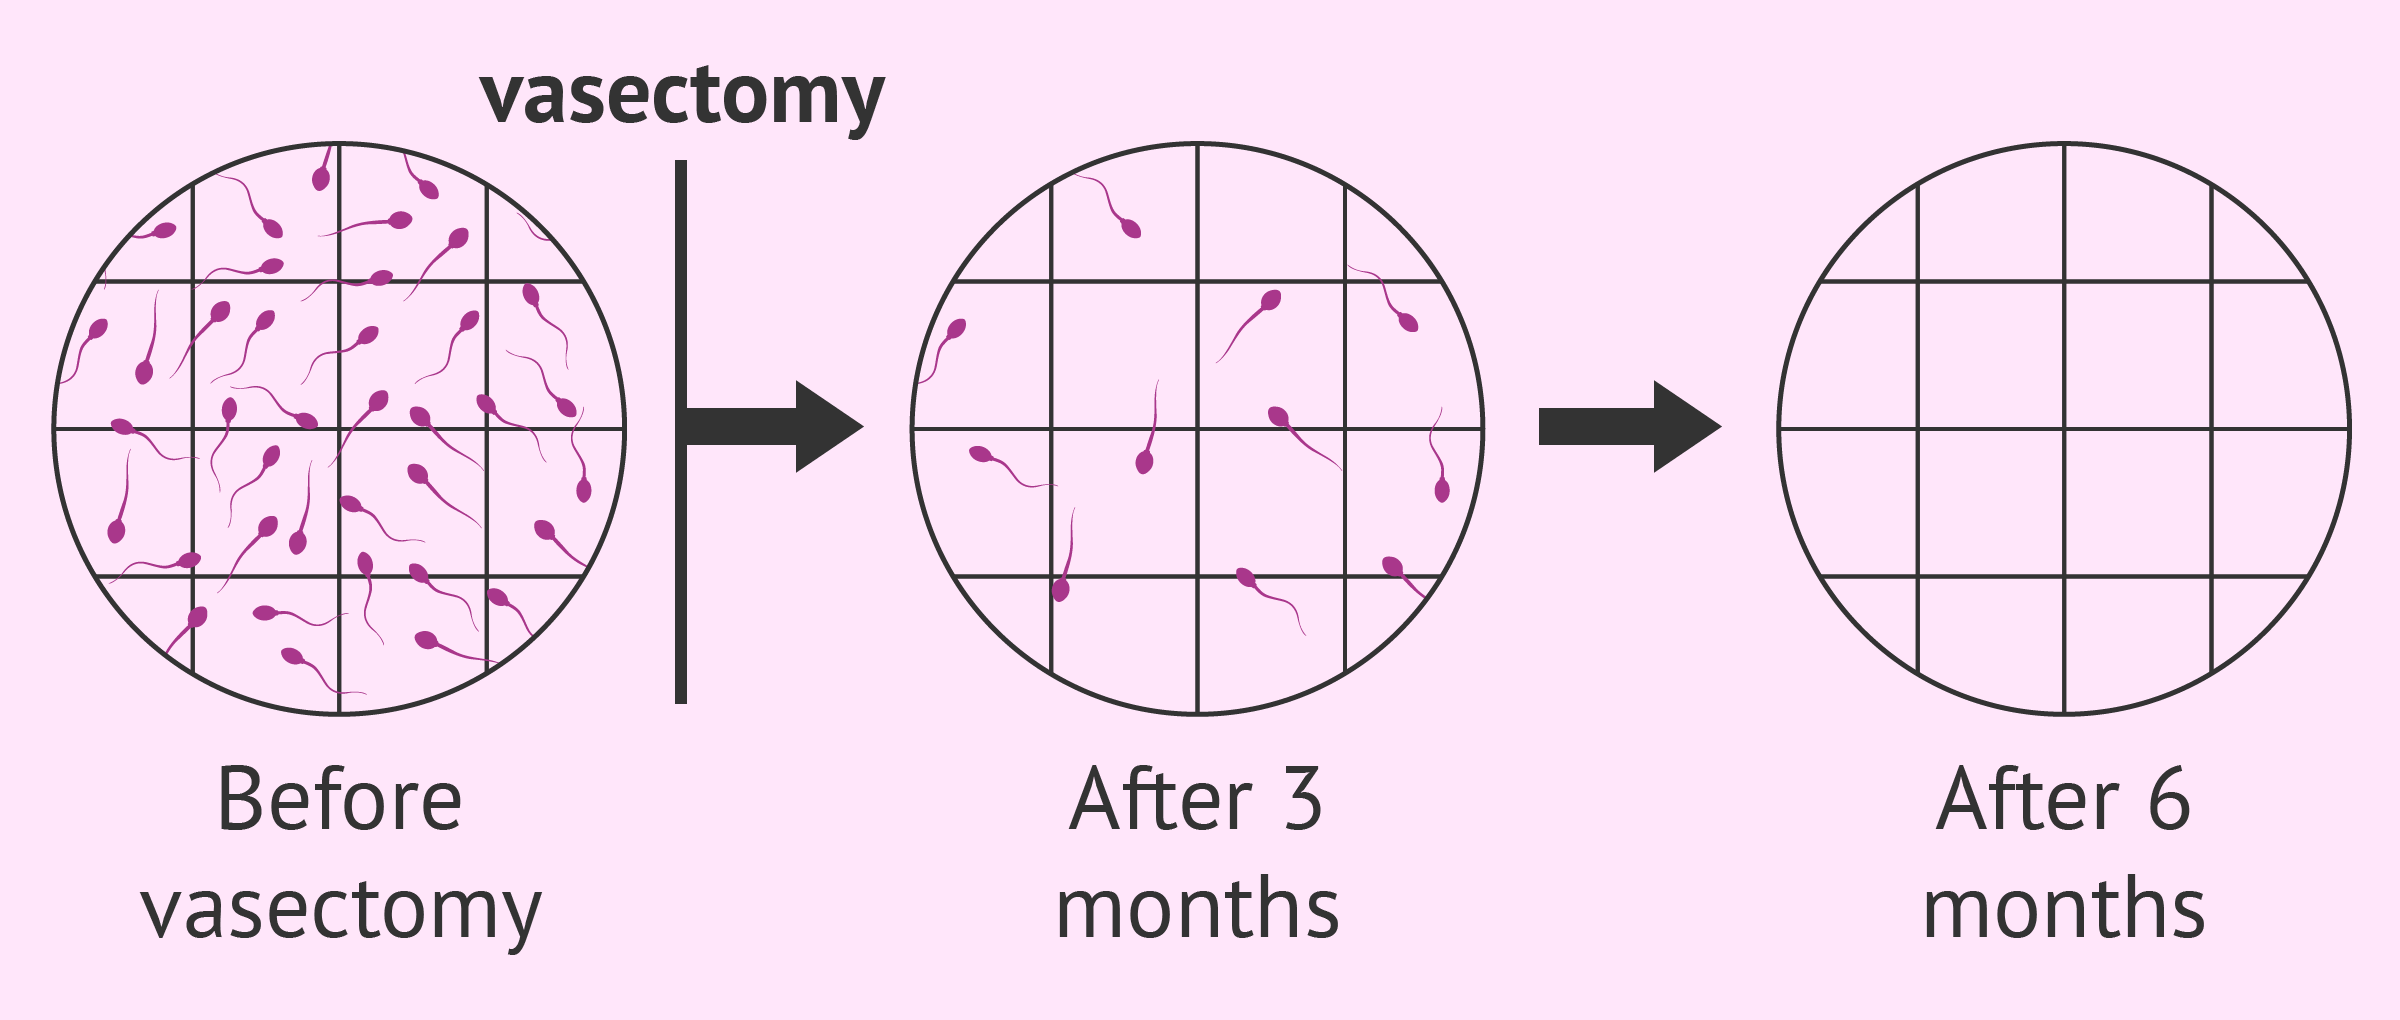 Saving male sperm before visectamy